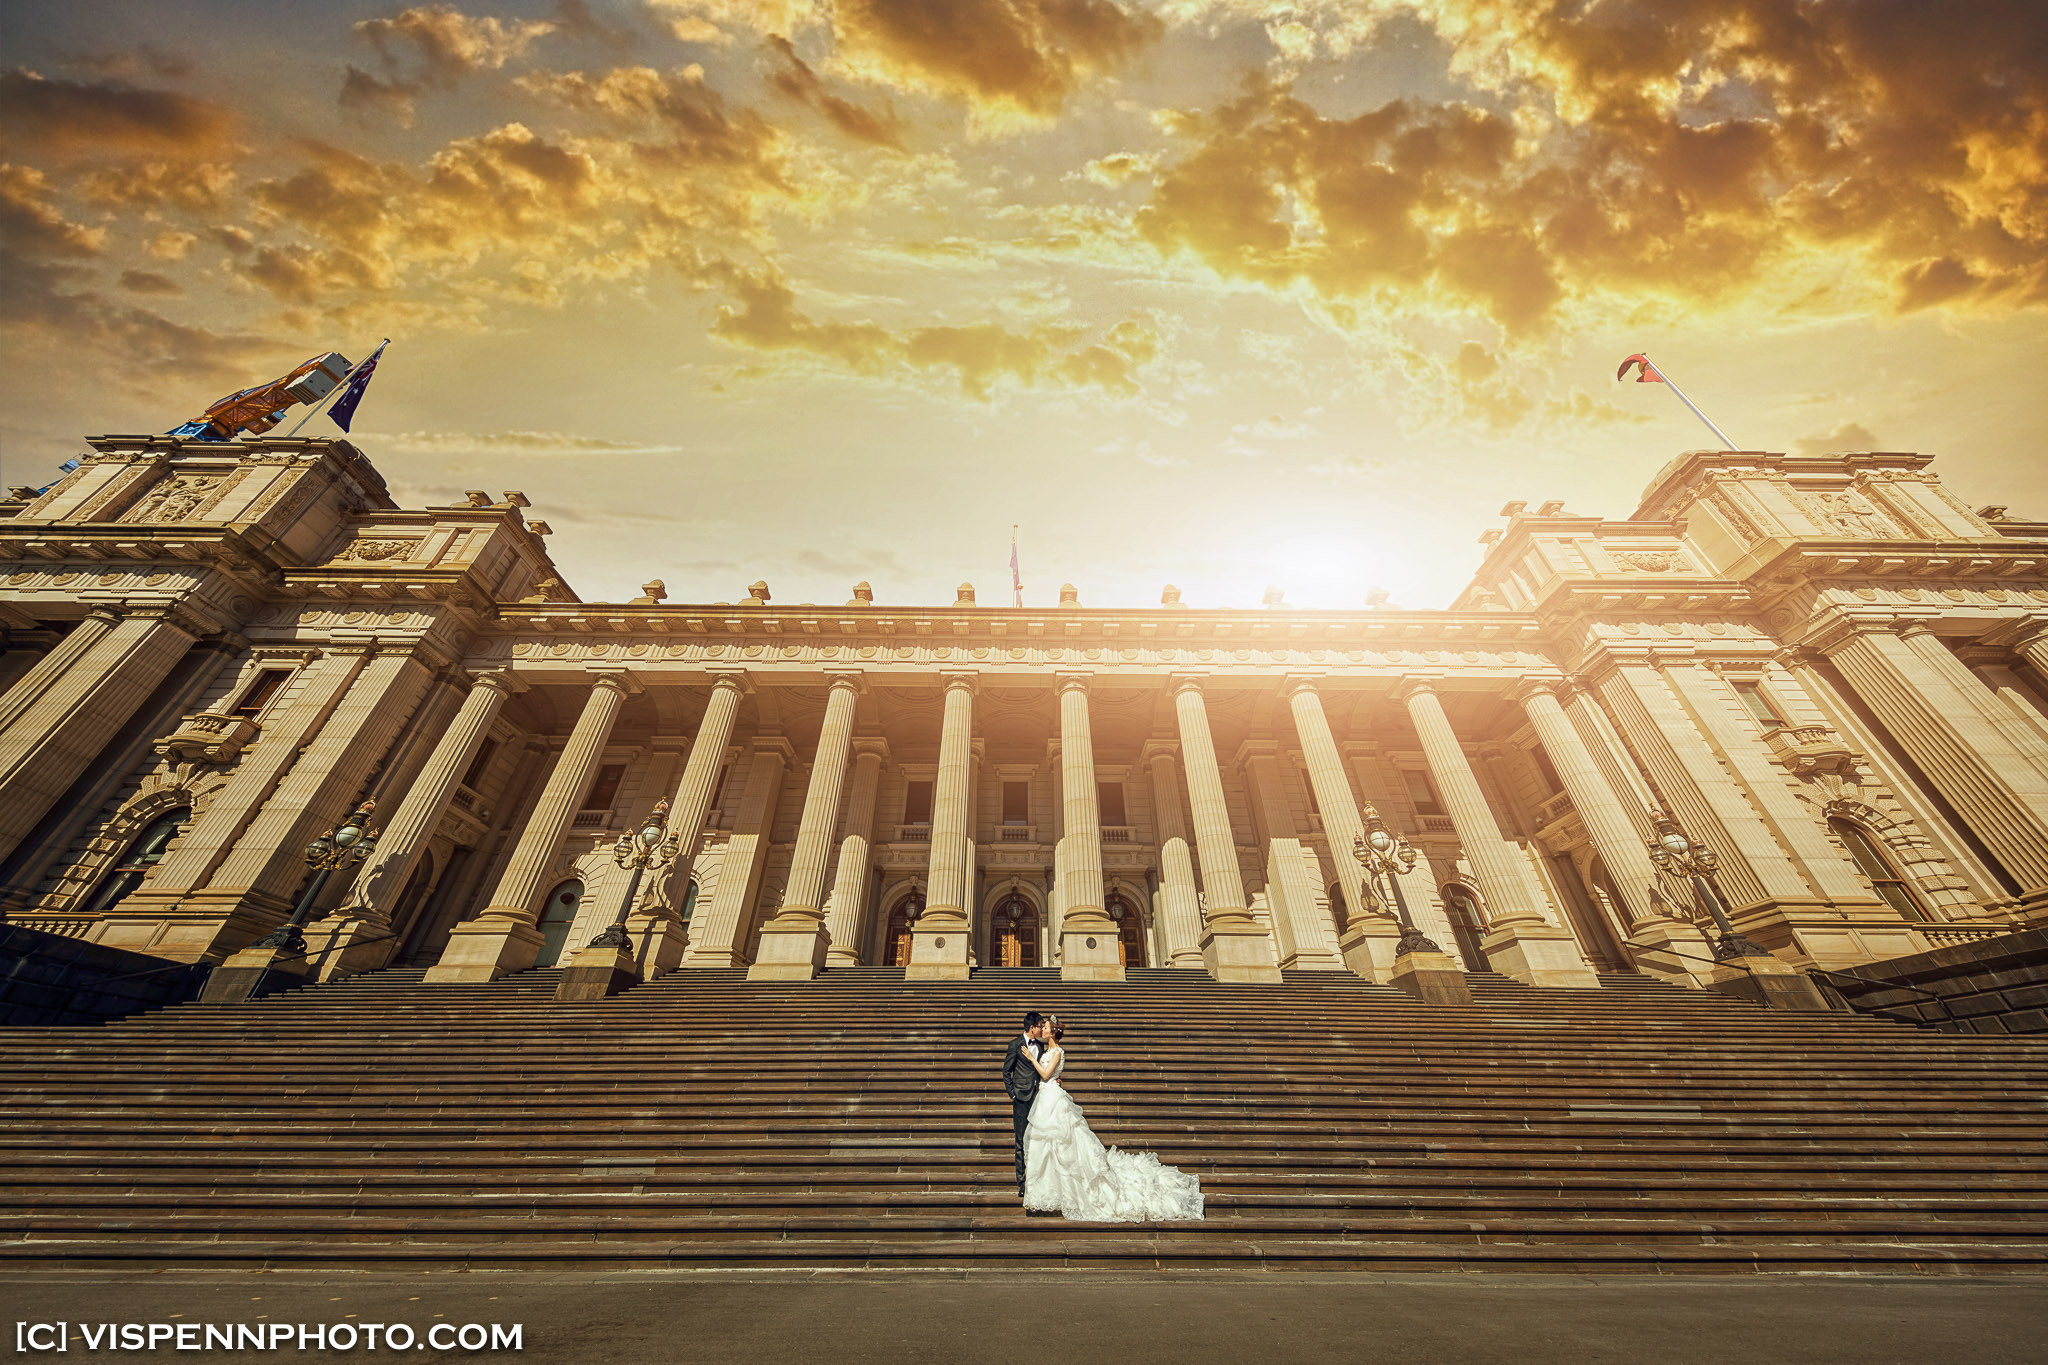 PRE WEDDING Photography Melbourne VISPENN 墨尔本 婚纱照 结婚照 婚纱摄影 VISPENN AllenWang 1655 1